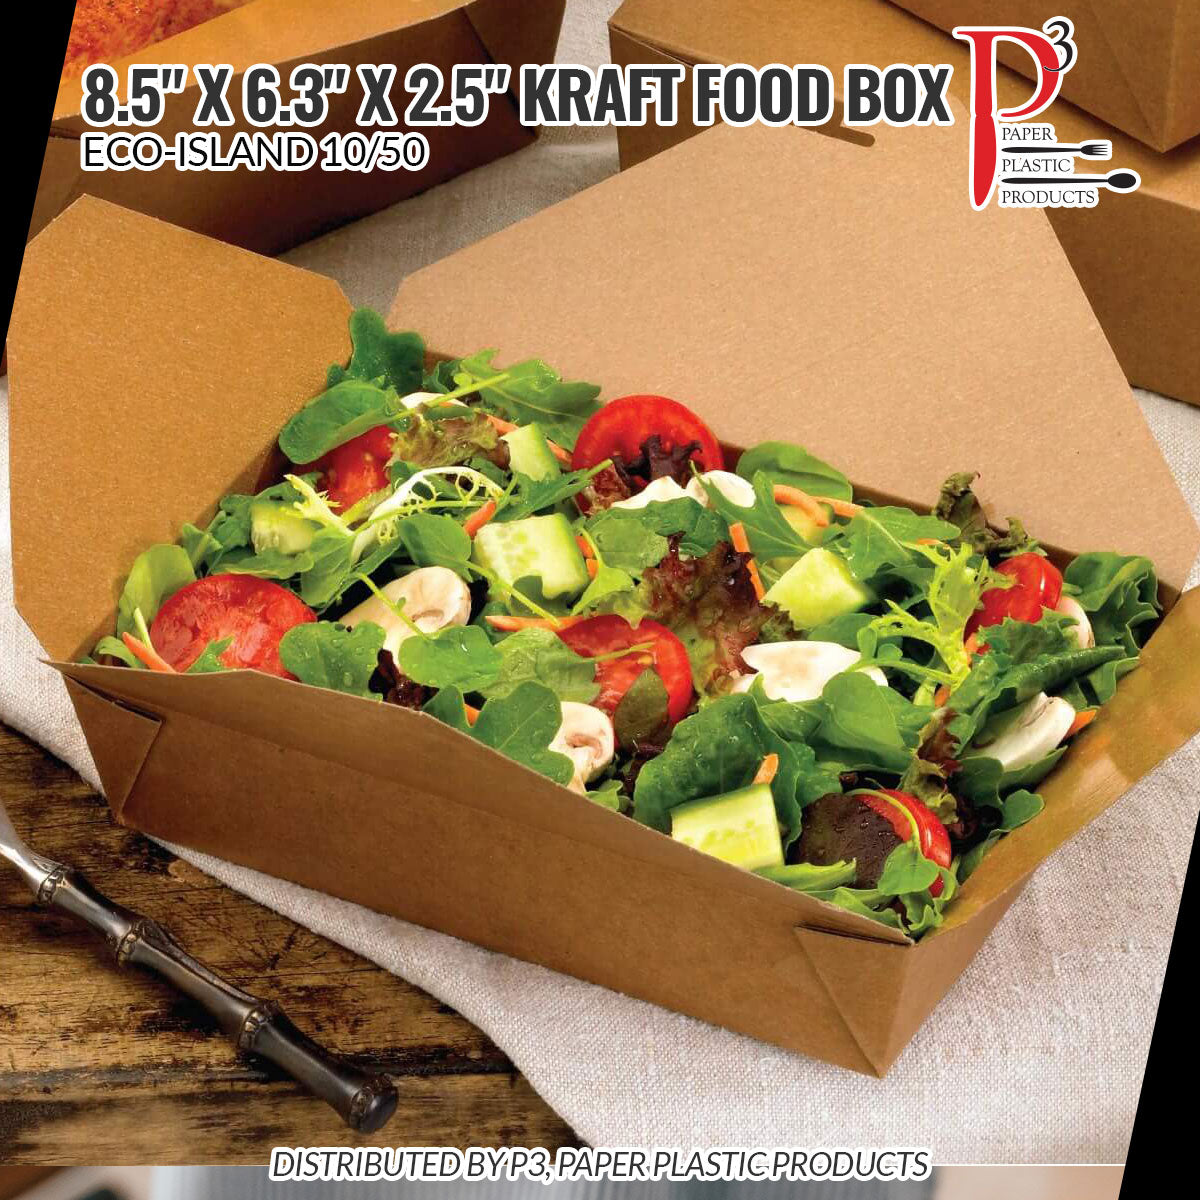 Kraft Food Box 8.5" x 6.3" x 2.5" Eco-Island 4/50